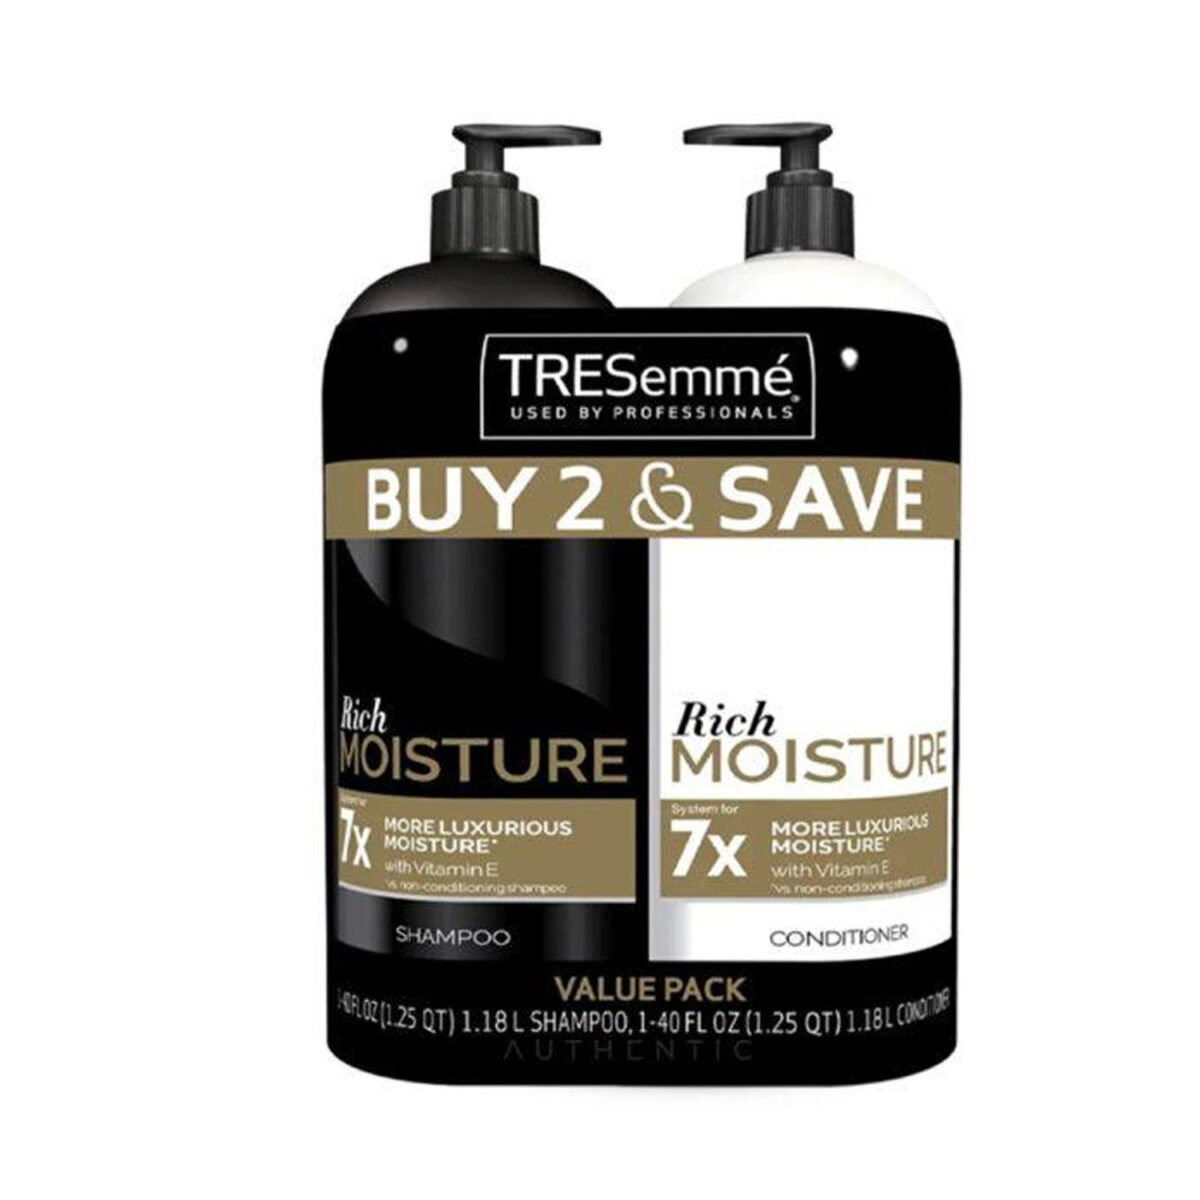 TRESemme Moisture Rich Shampoo & Conditioner Value Pack (1.18l each)